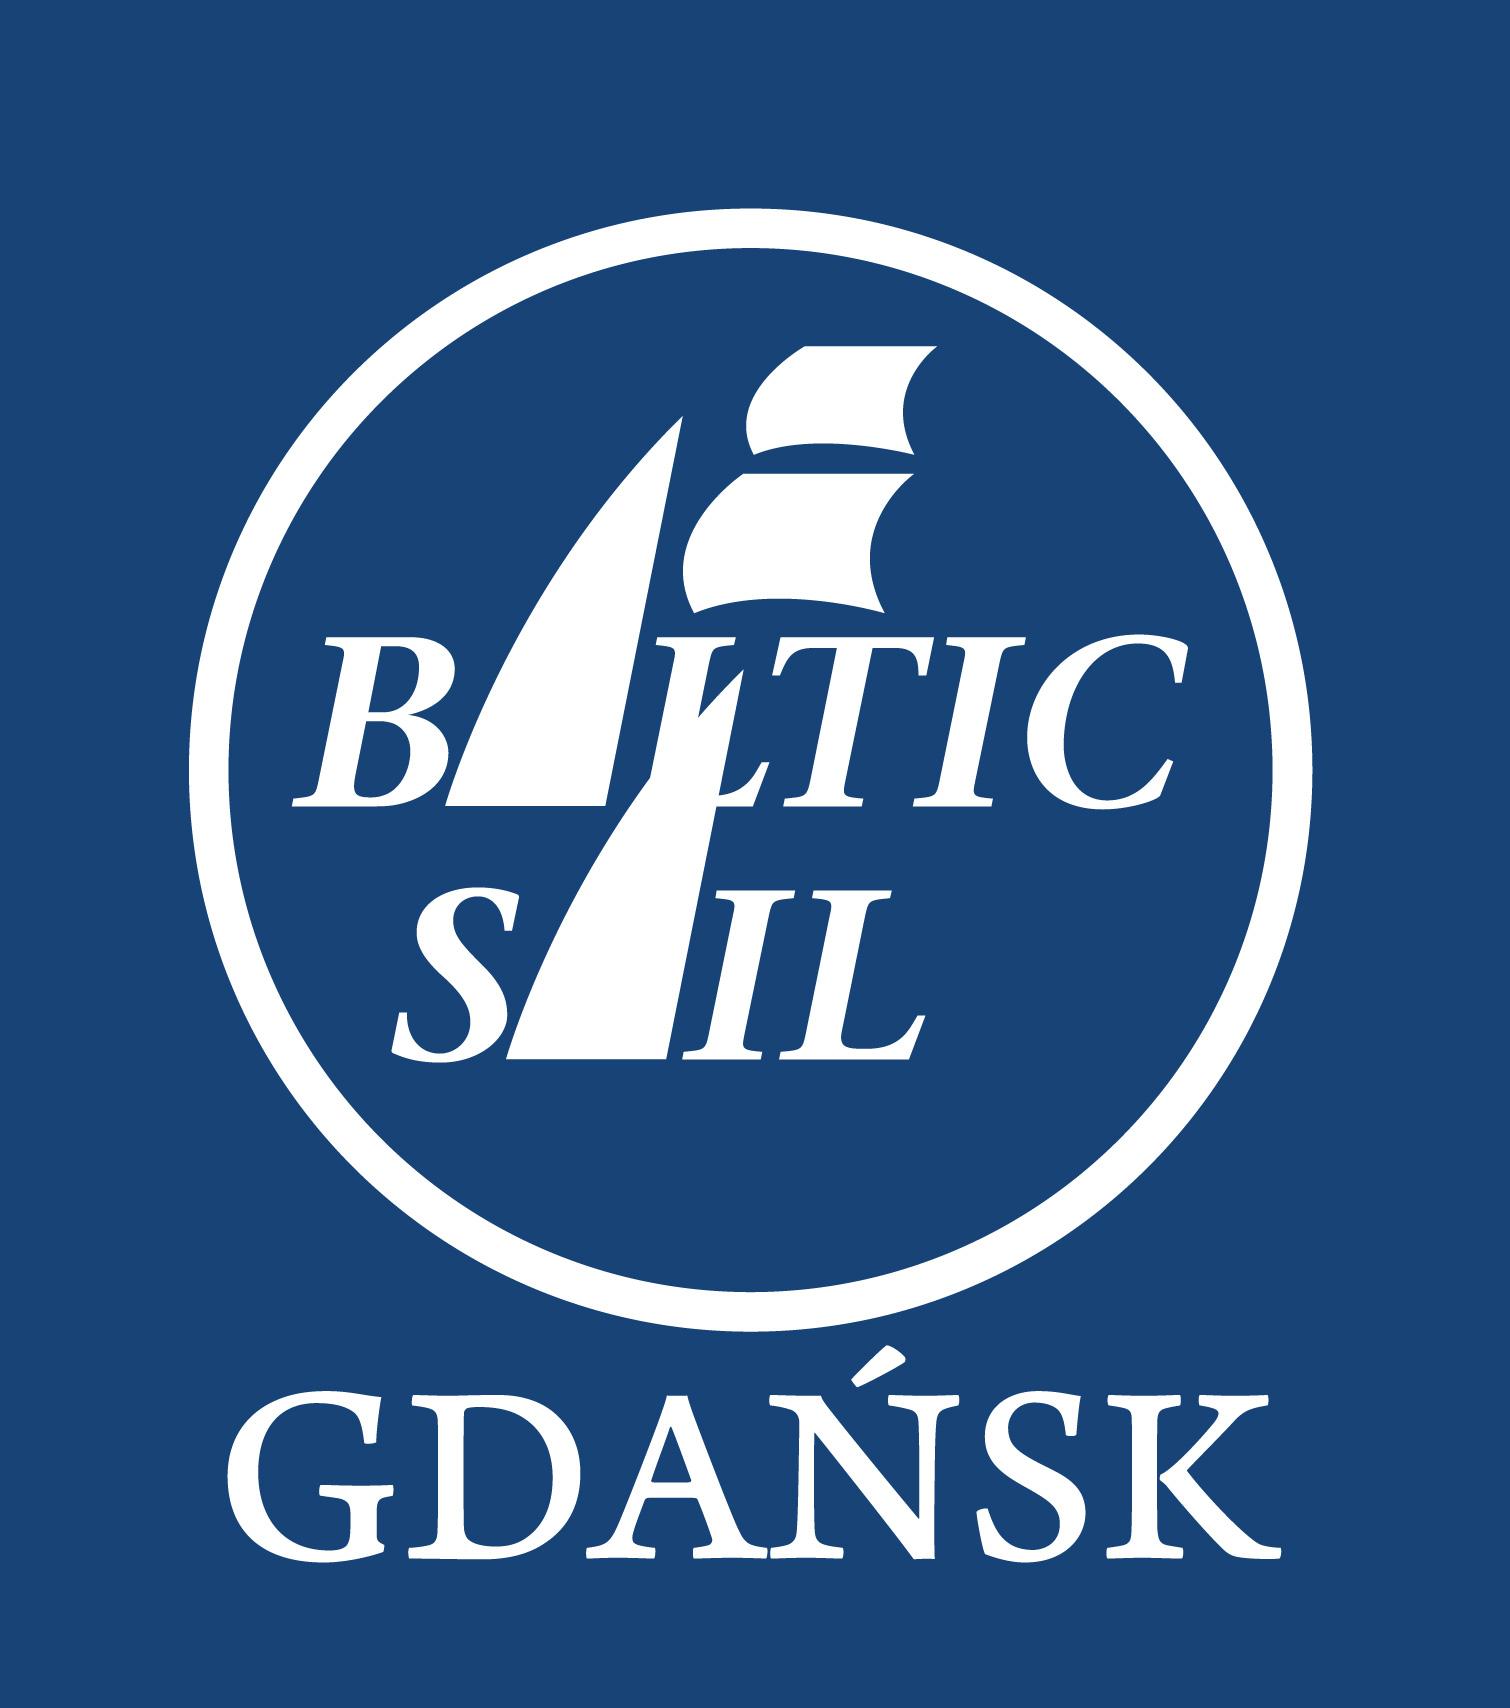 baltic sail gdańsk